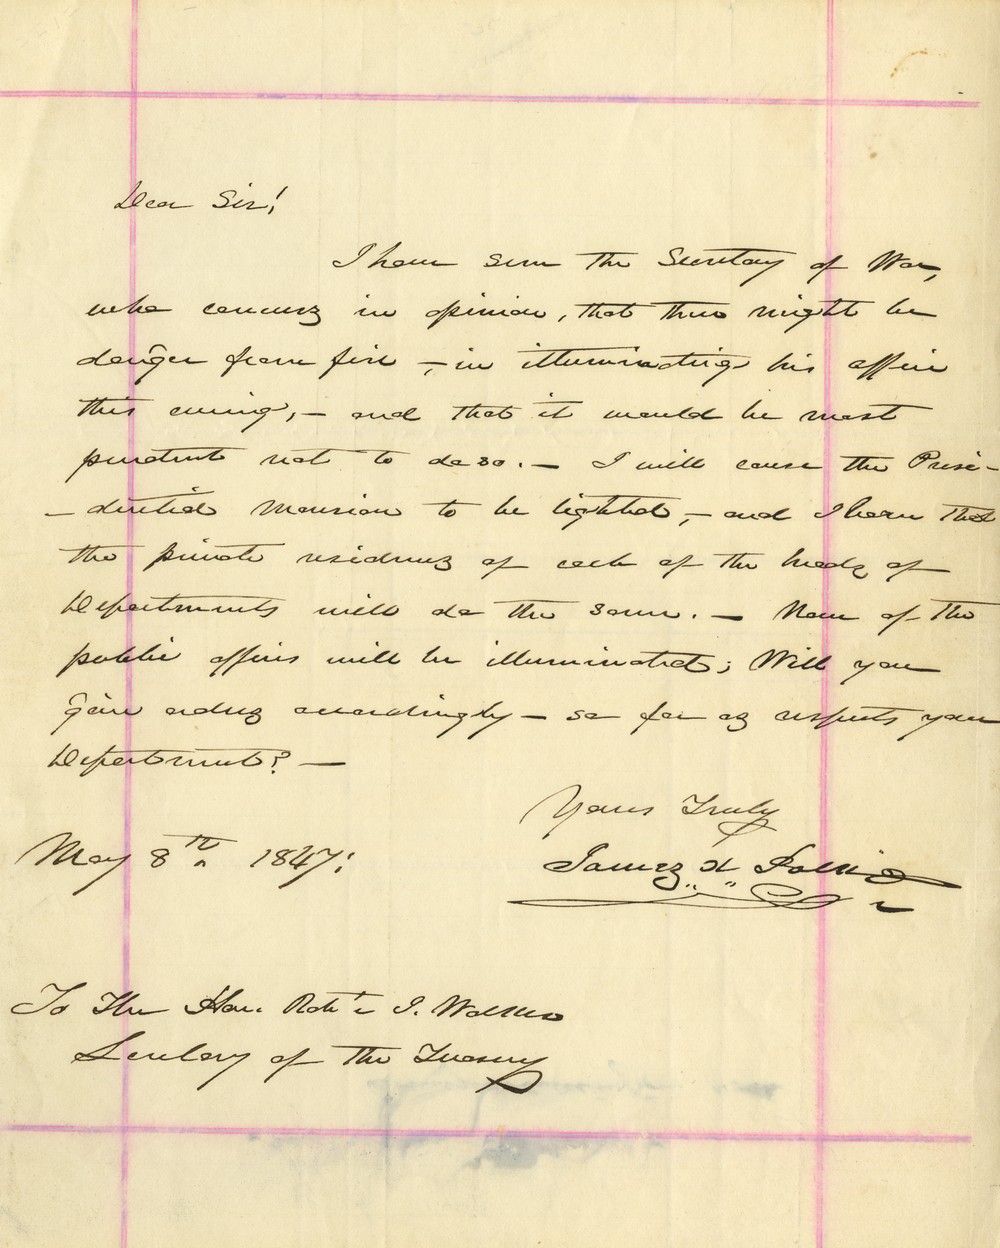 James K. Polk Gives Orders for a Fireproof Celebration for the Battle of Cerro Gordo in Washington